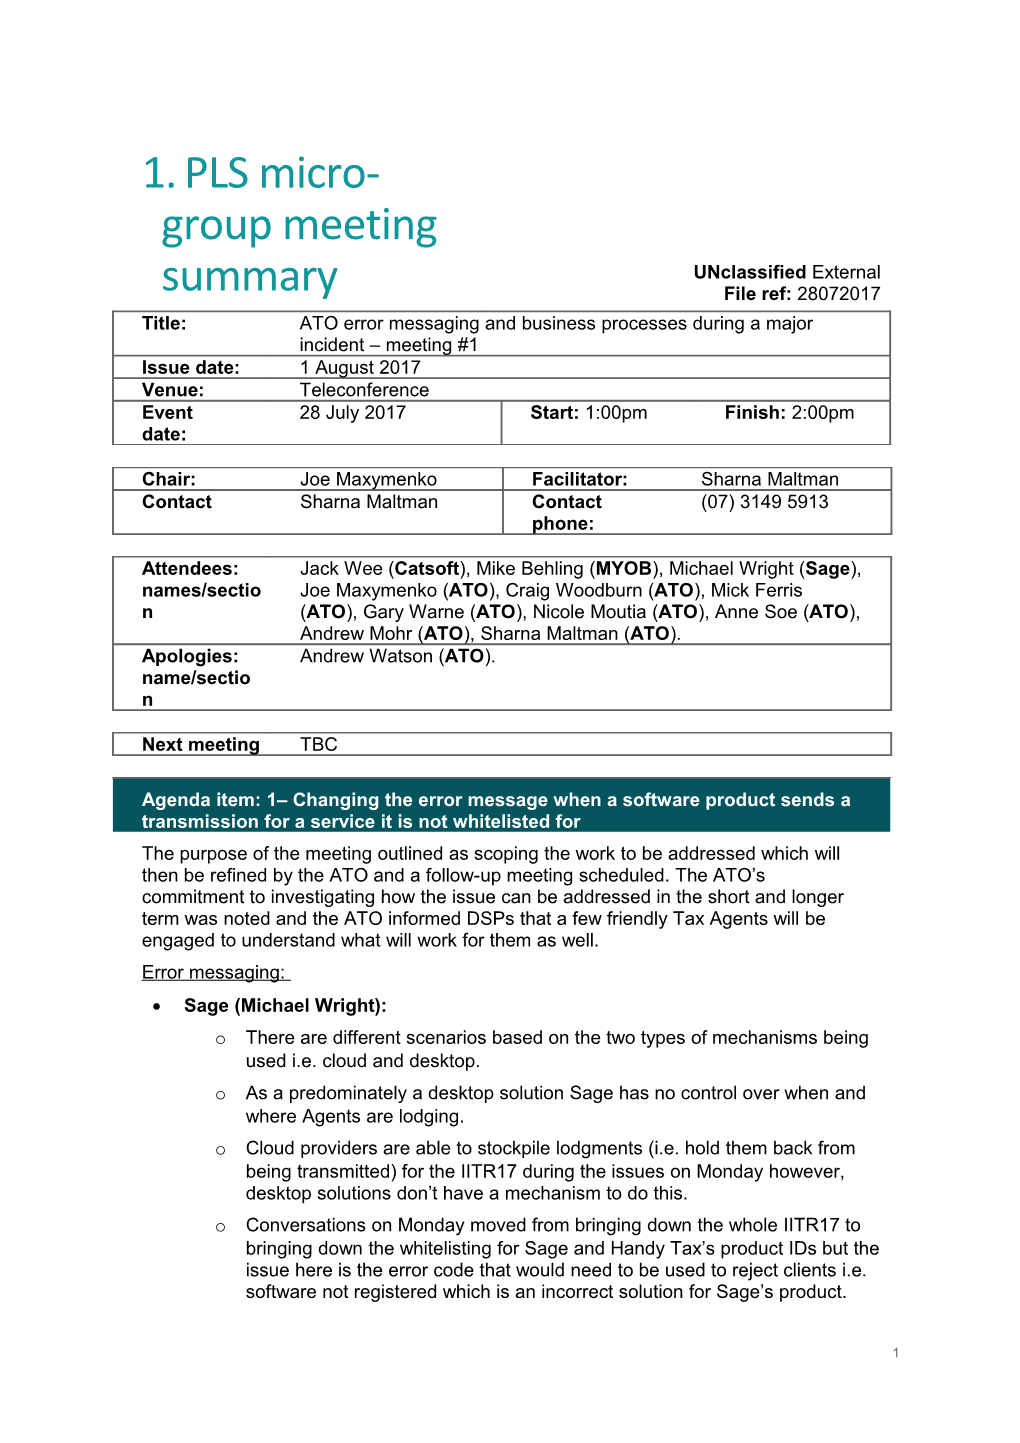 PLS Micro-Group Meeting Summary